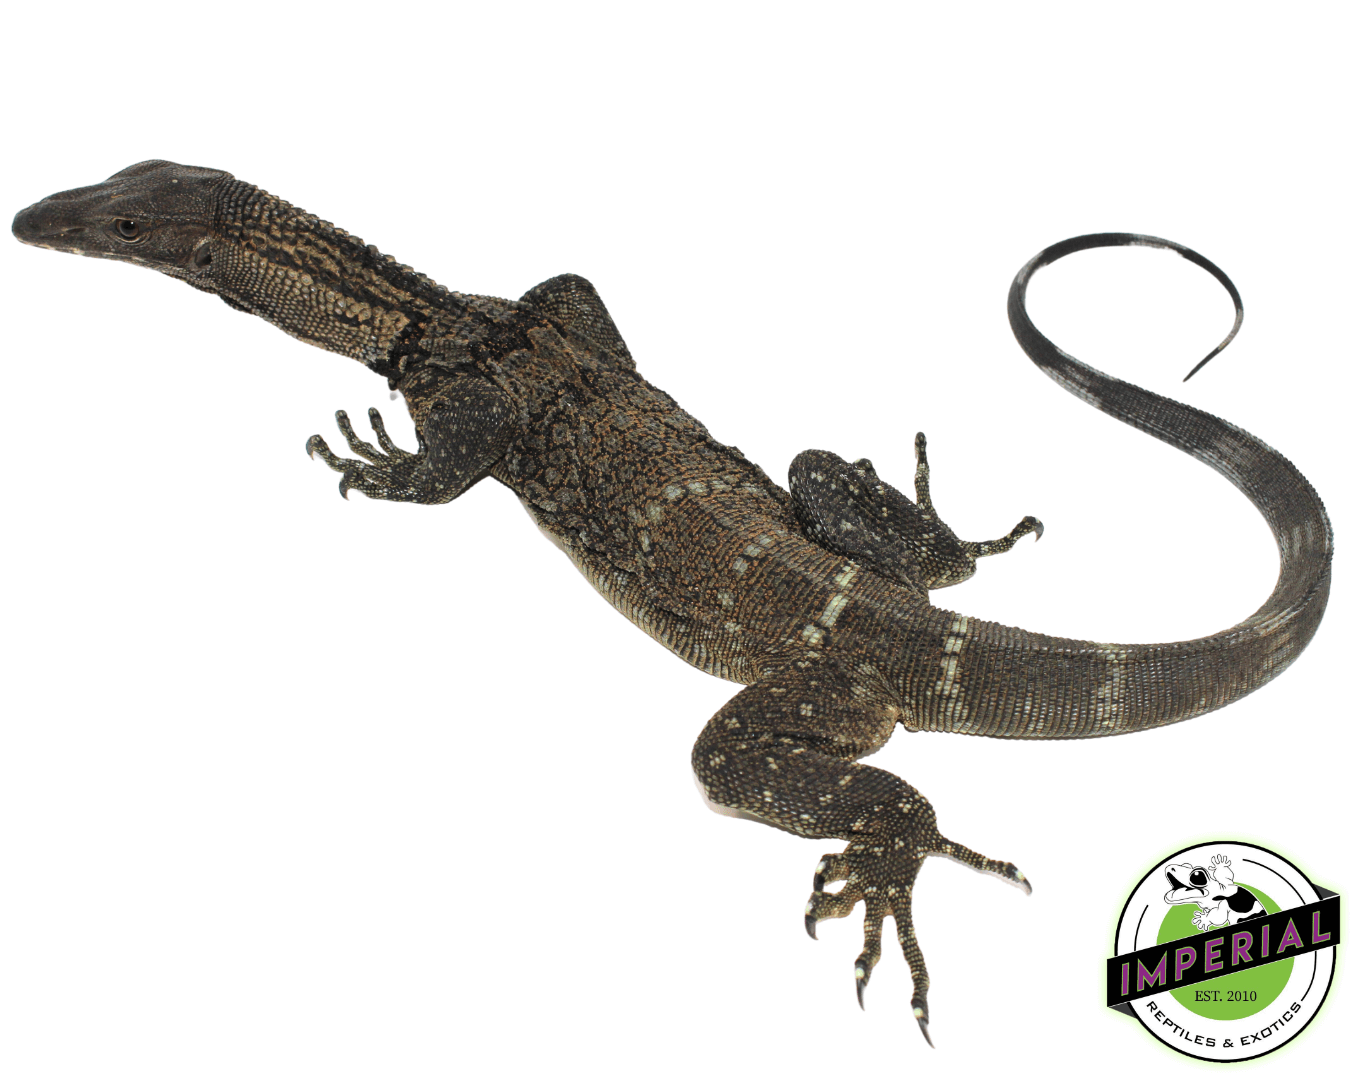 black roughneck monitor lizard for sale, buy reptiles online